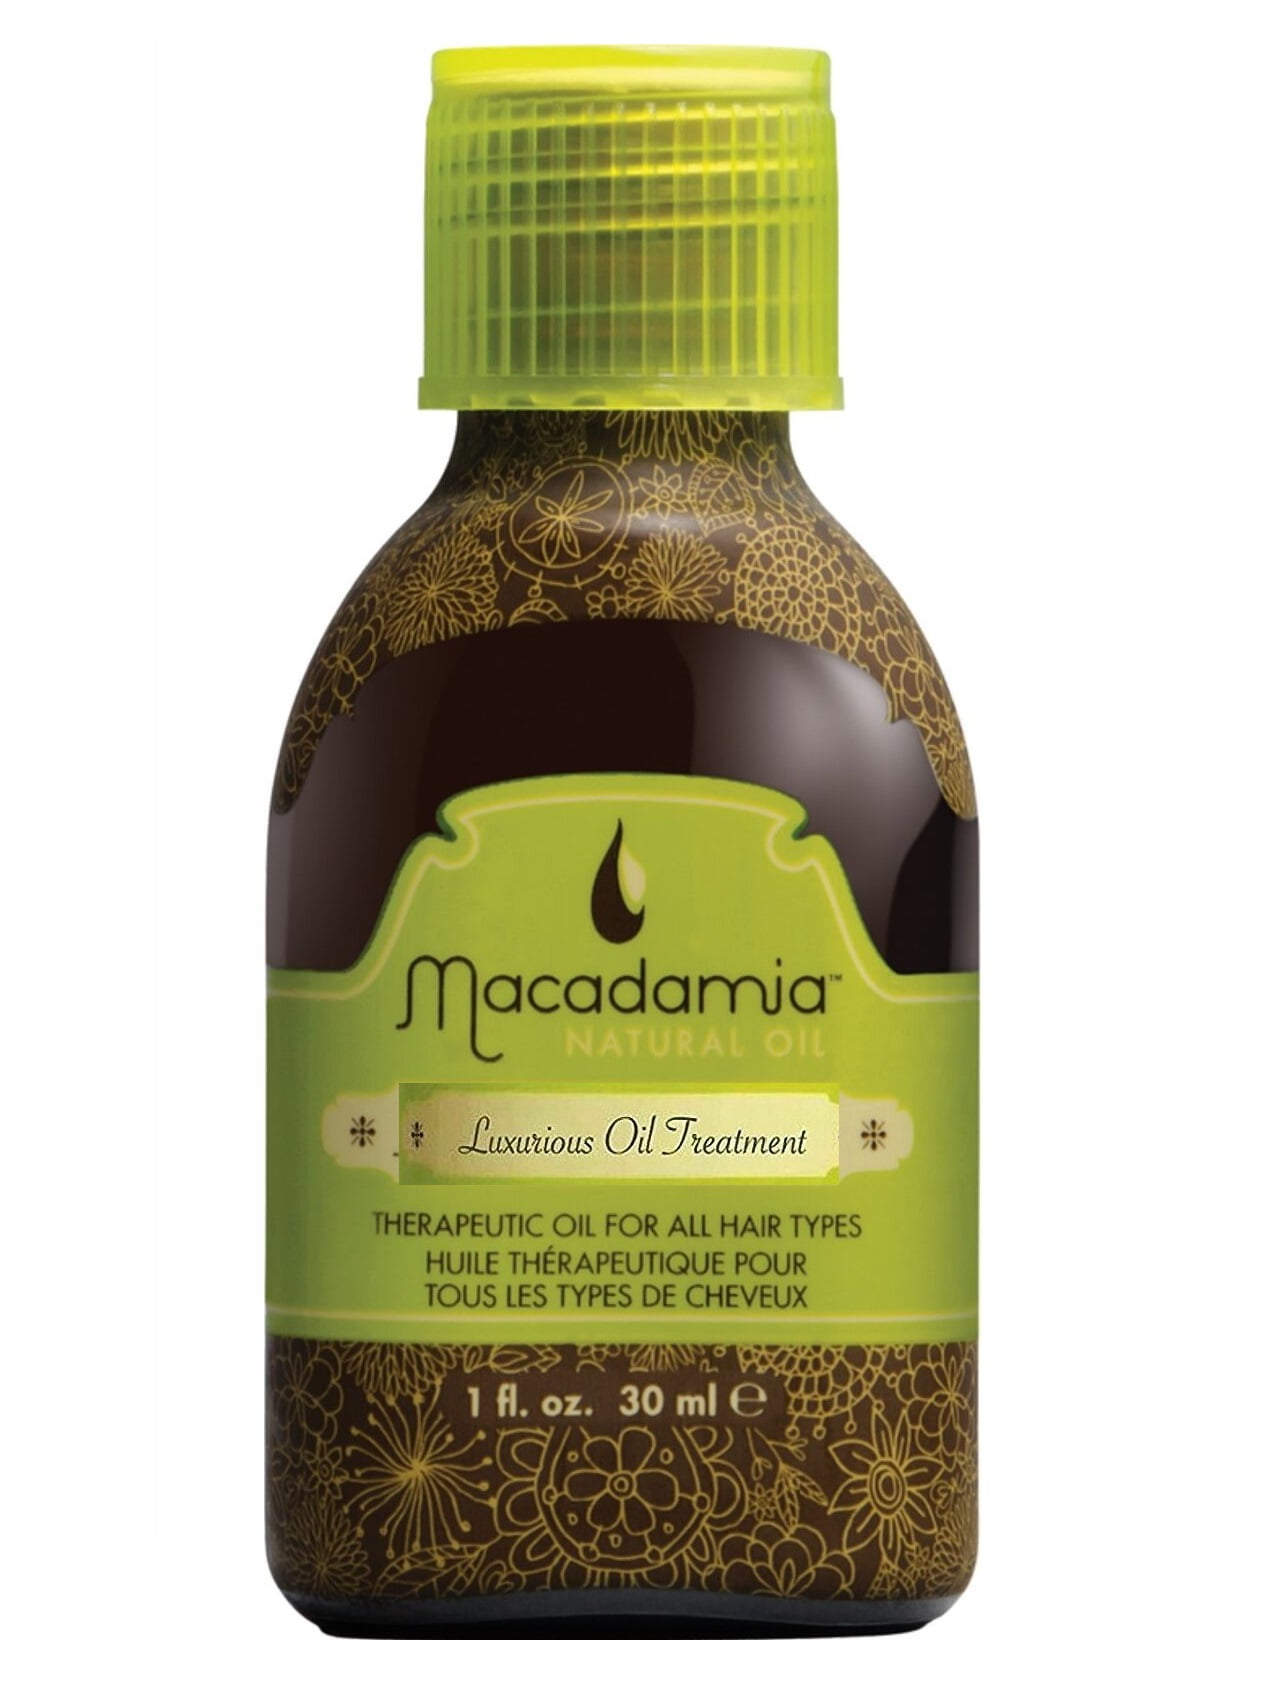 Macadamia Natural Oil Luxurious Oil Treatment, 1 Oz - Walmart.com